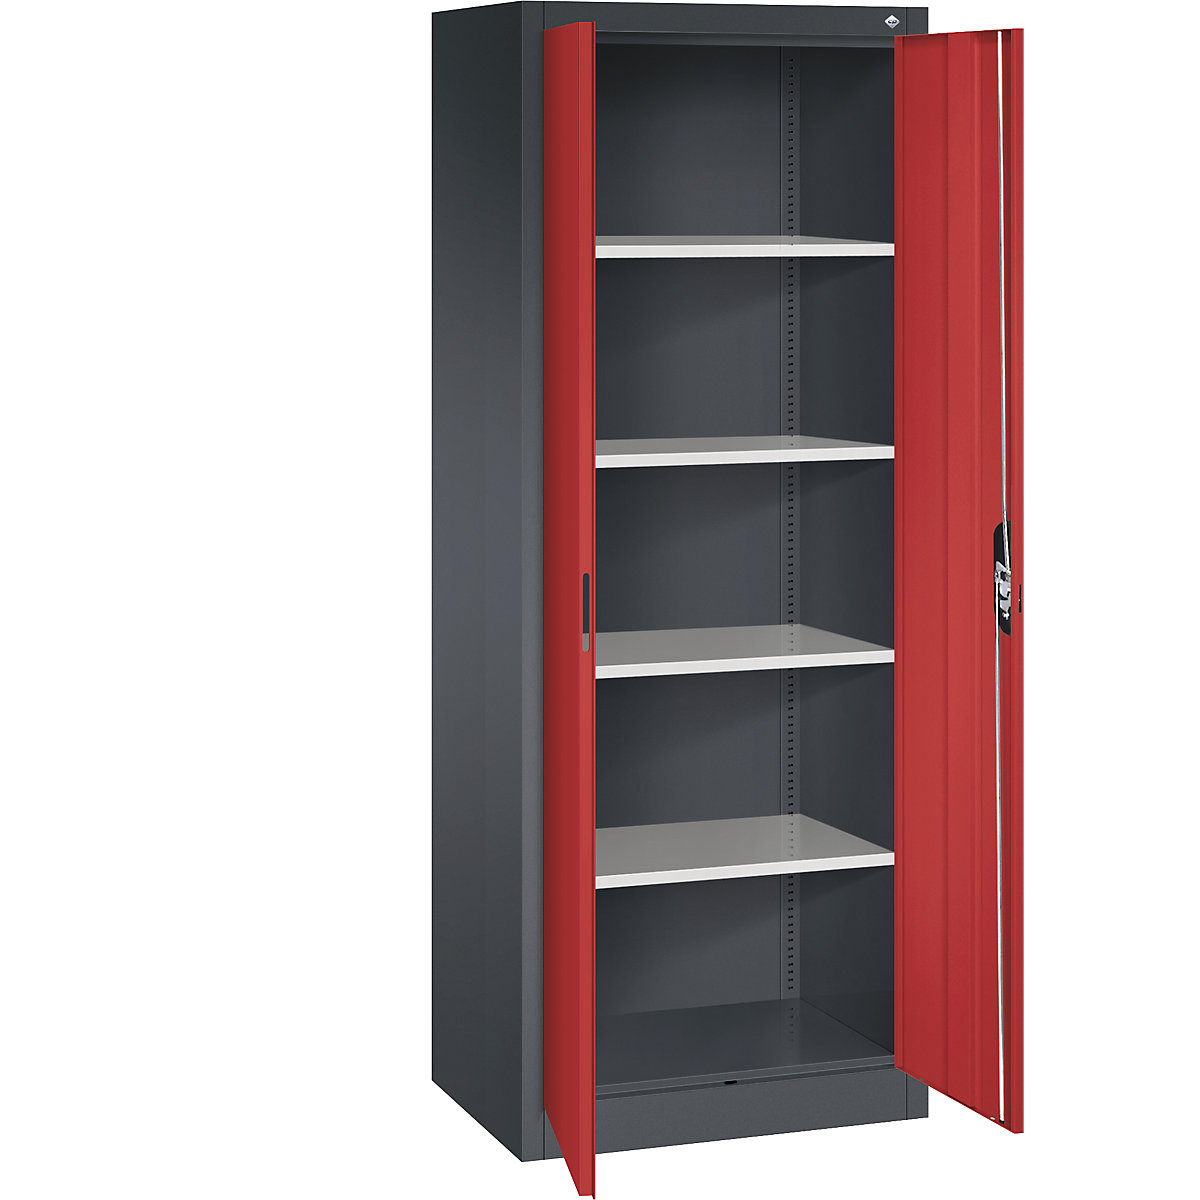 C+P – ACURADO universal cupboard, WxD 700 x 500 mm, black grey / flame red